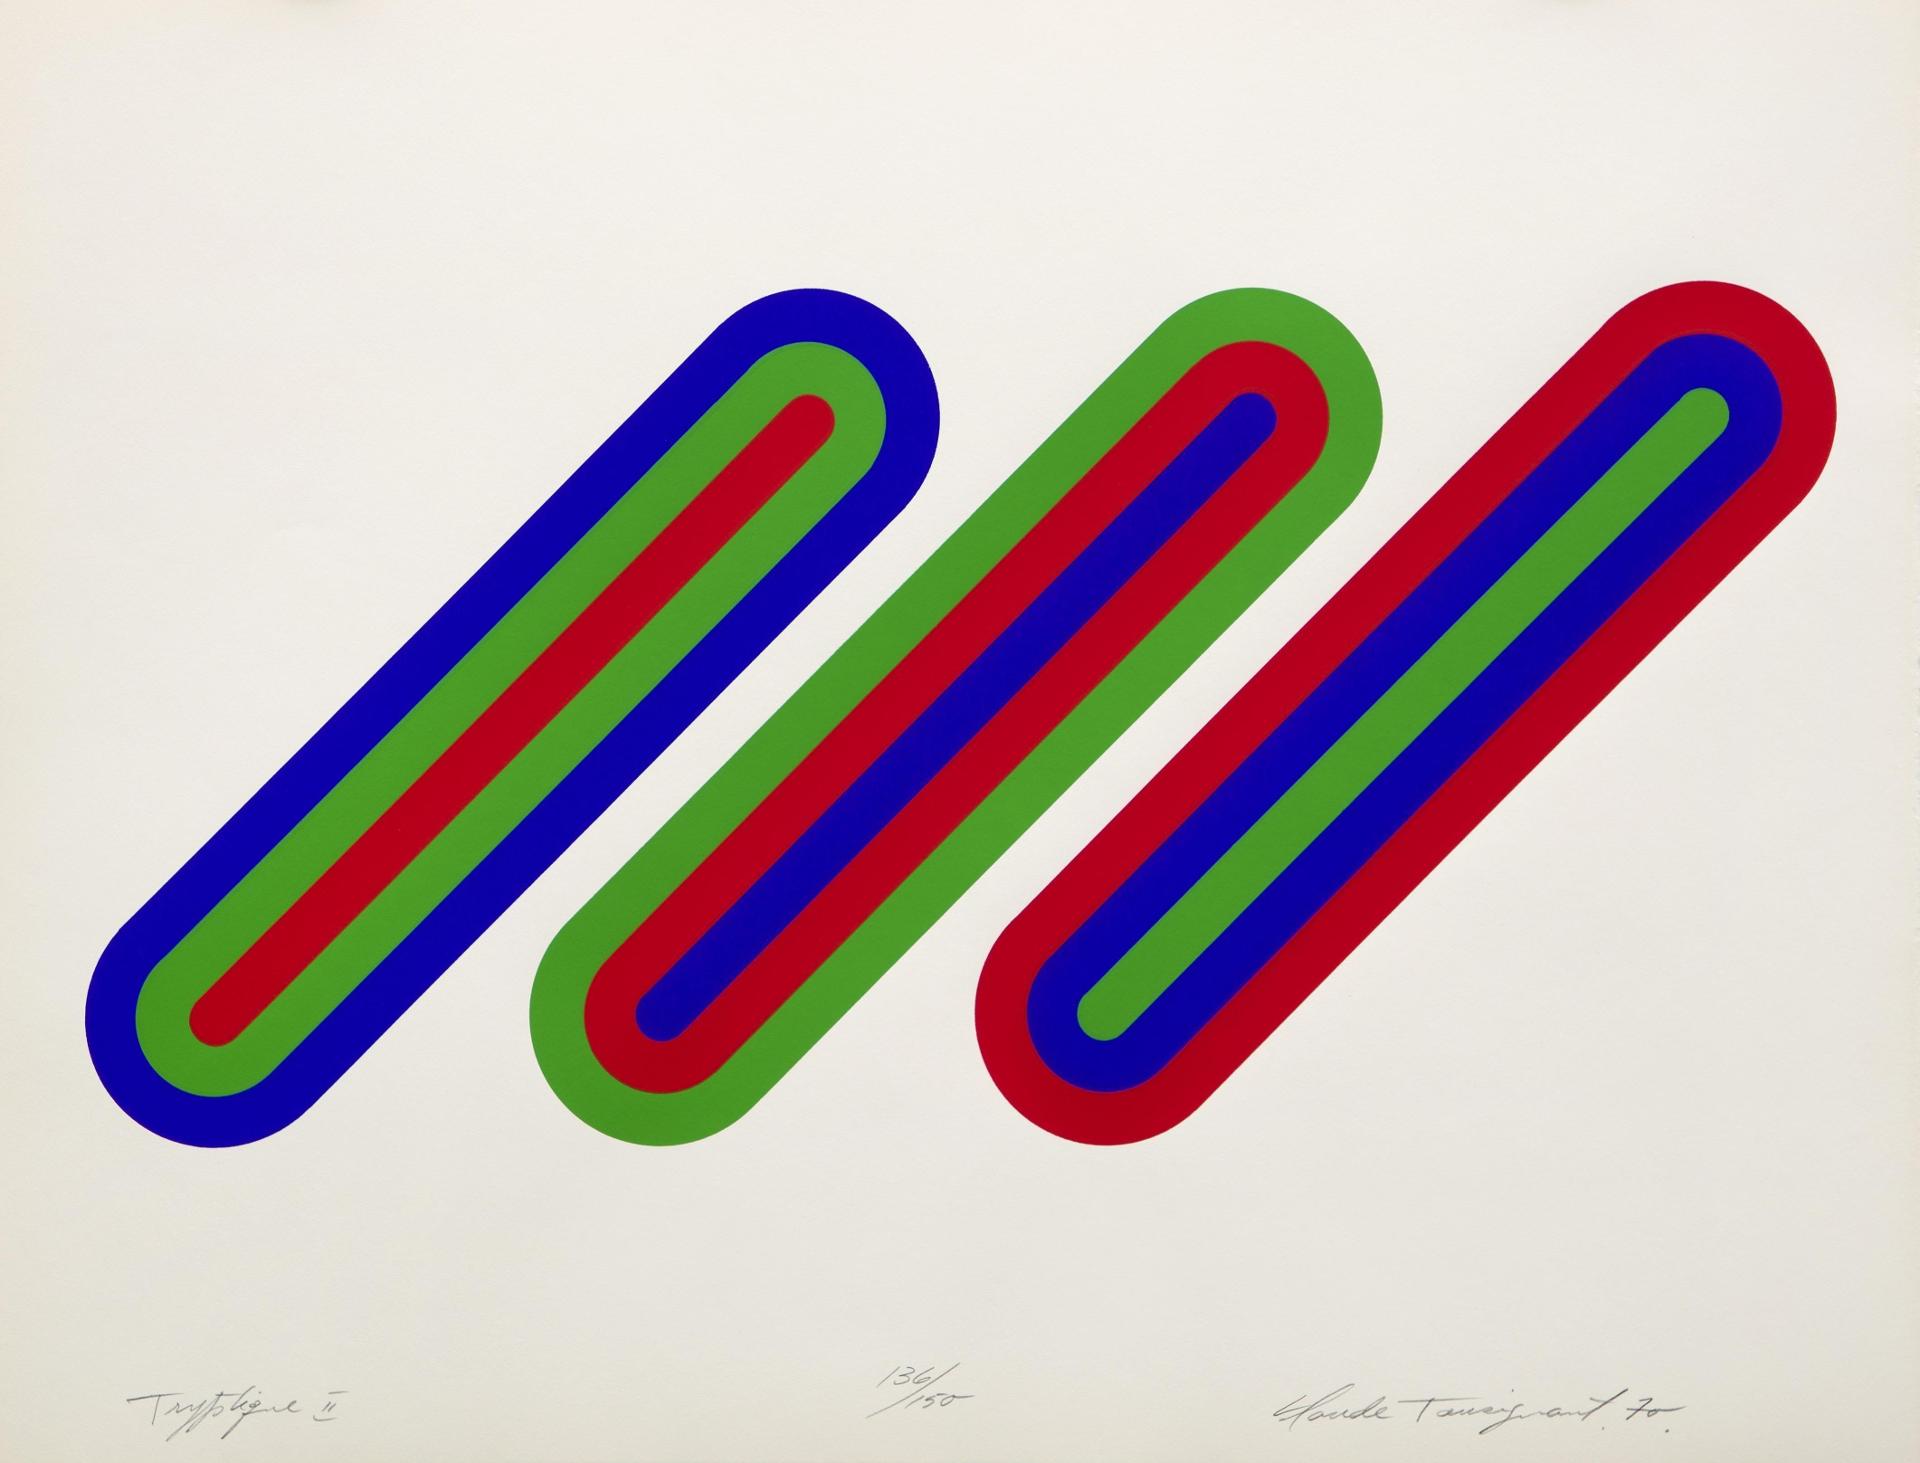 Claude Tousignant (1932) - Triptyque II, 1970